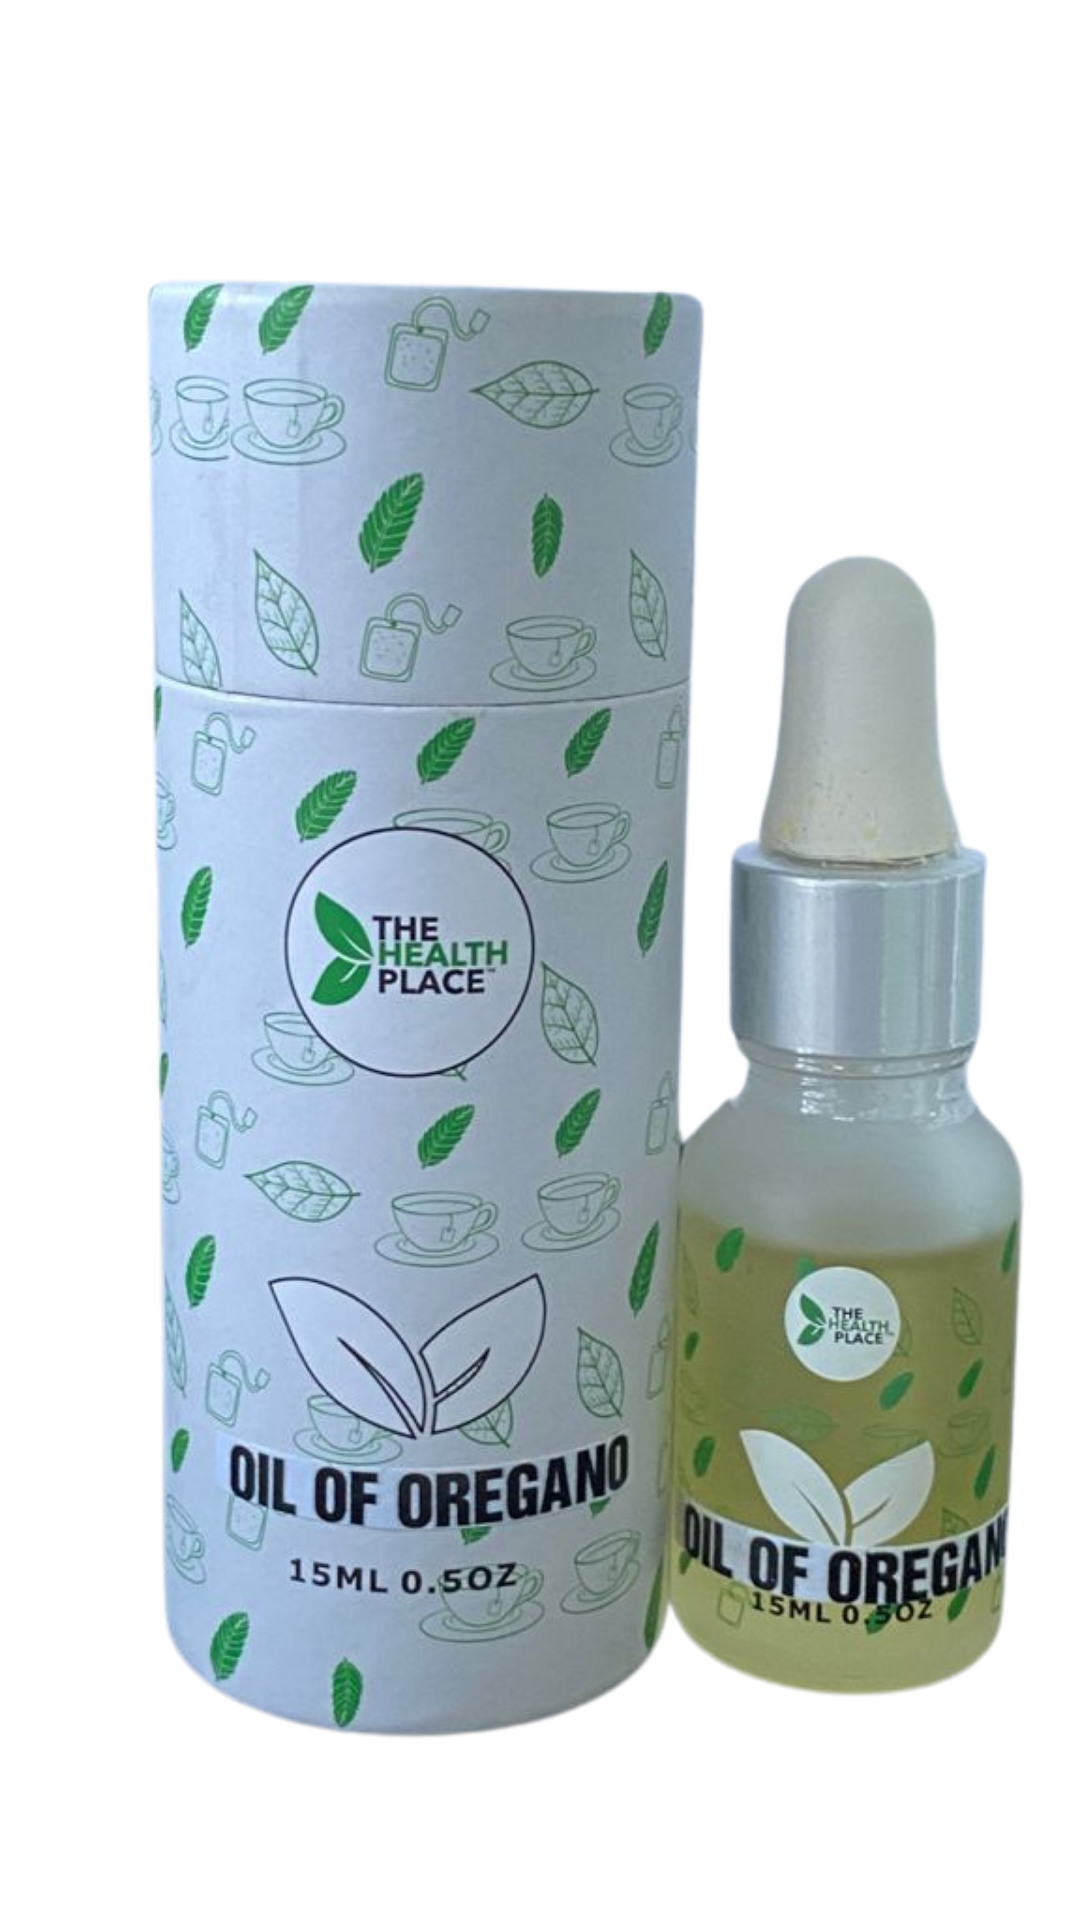 Oregano Essential Oil (15ml)- Certified Organic Pure Natural Undiluted